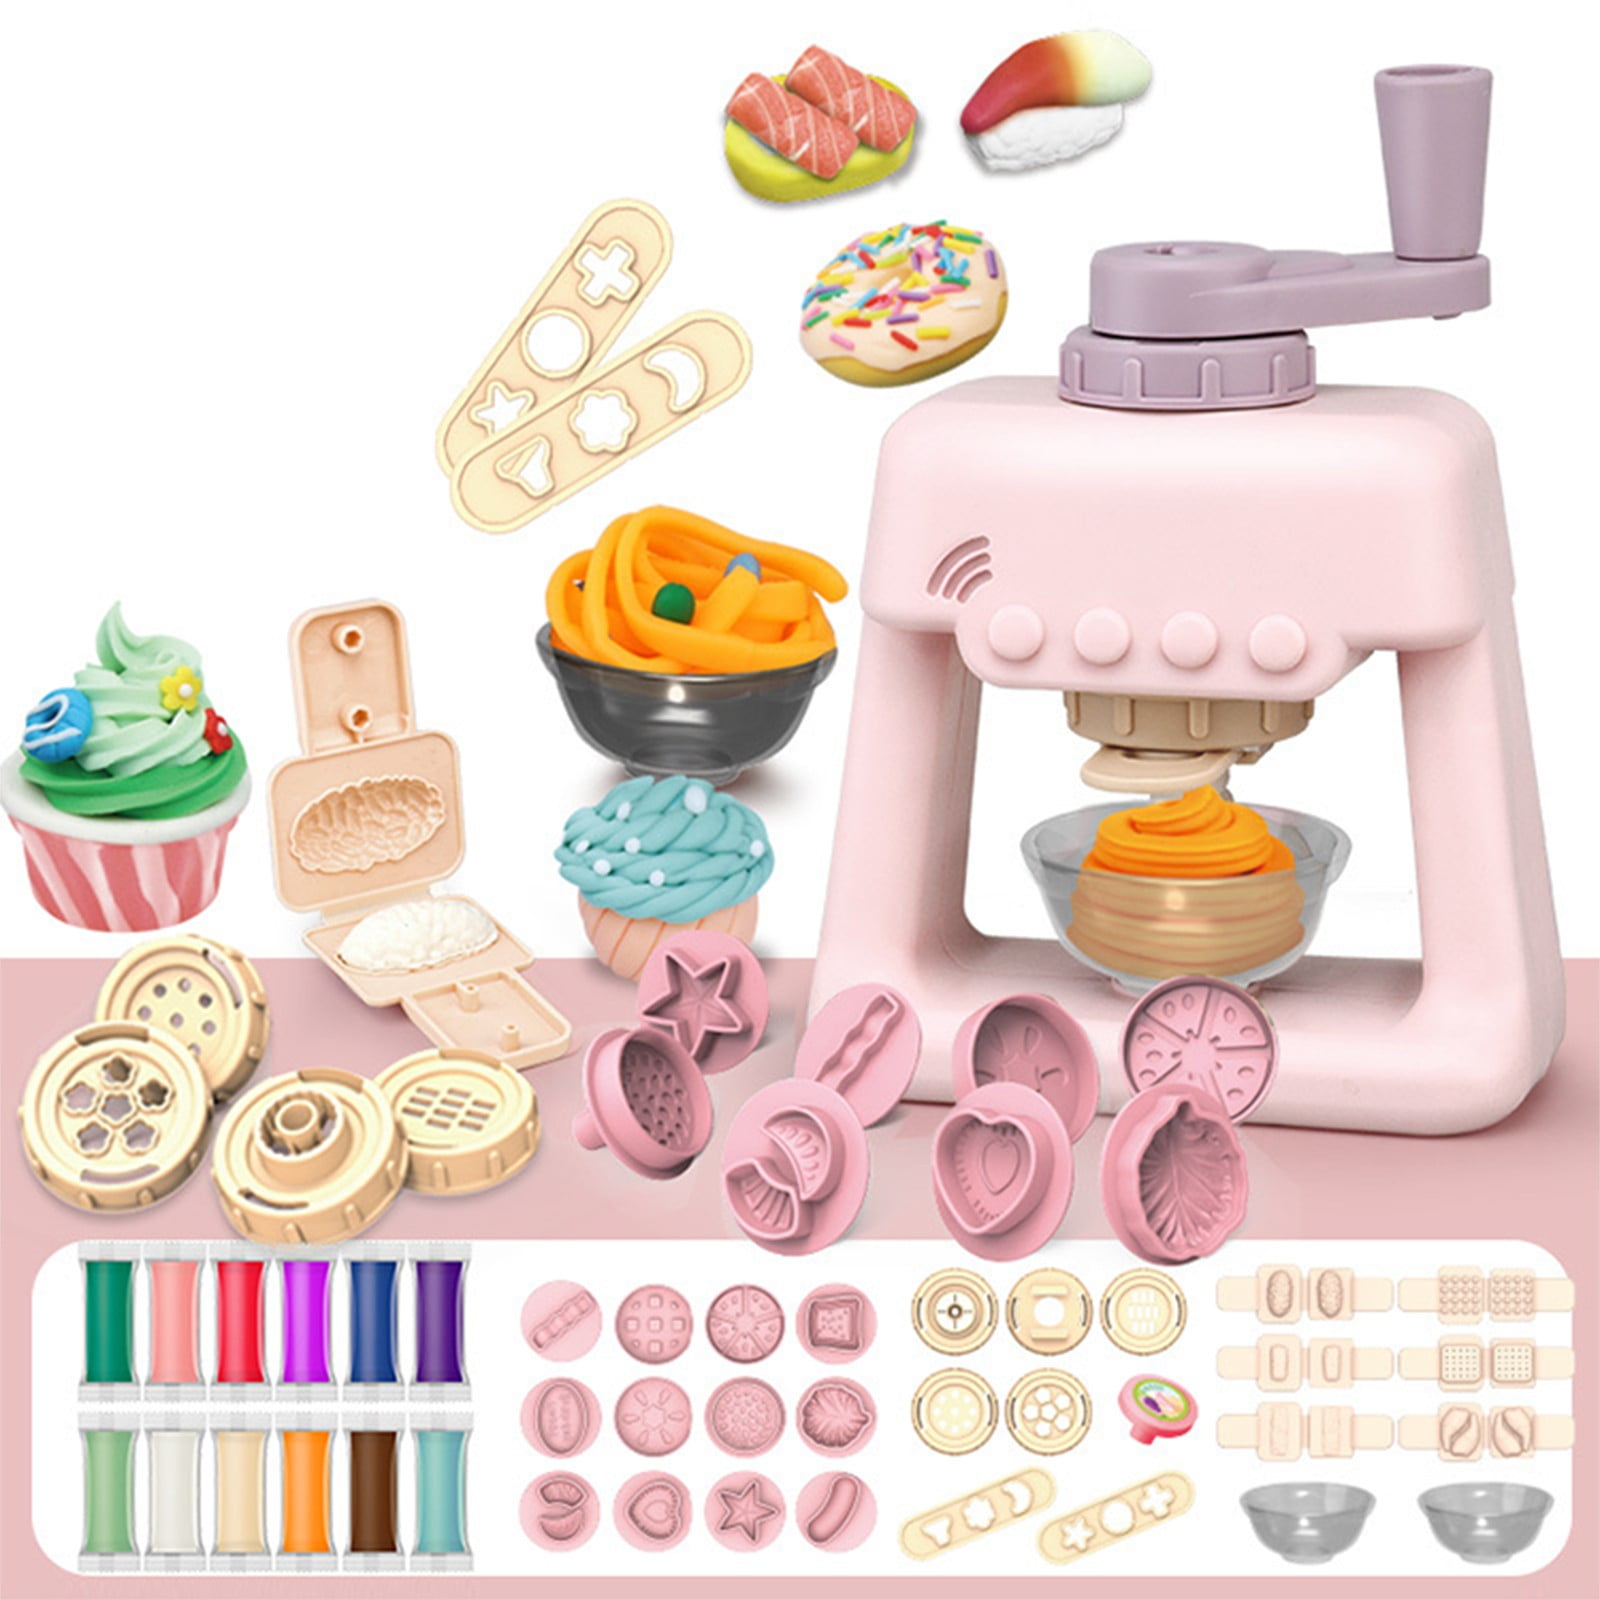 Play Dough Tool Kit For Kids, 41Pcs Dough Accessories Molds, Shape